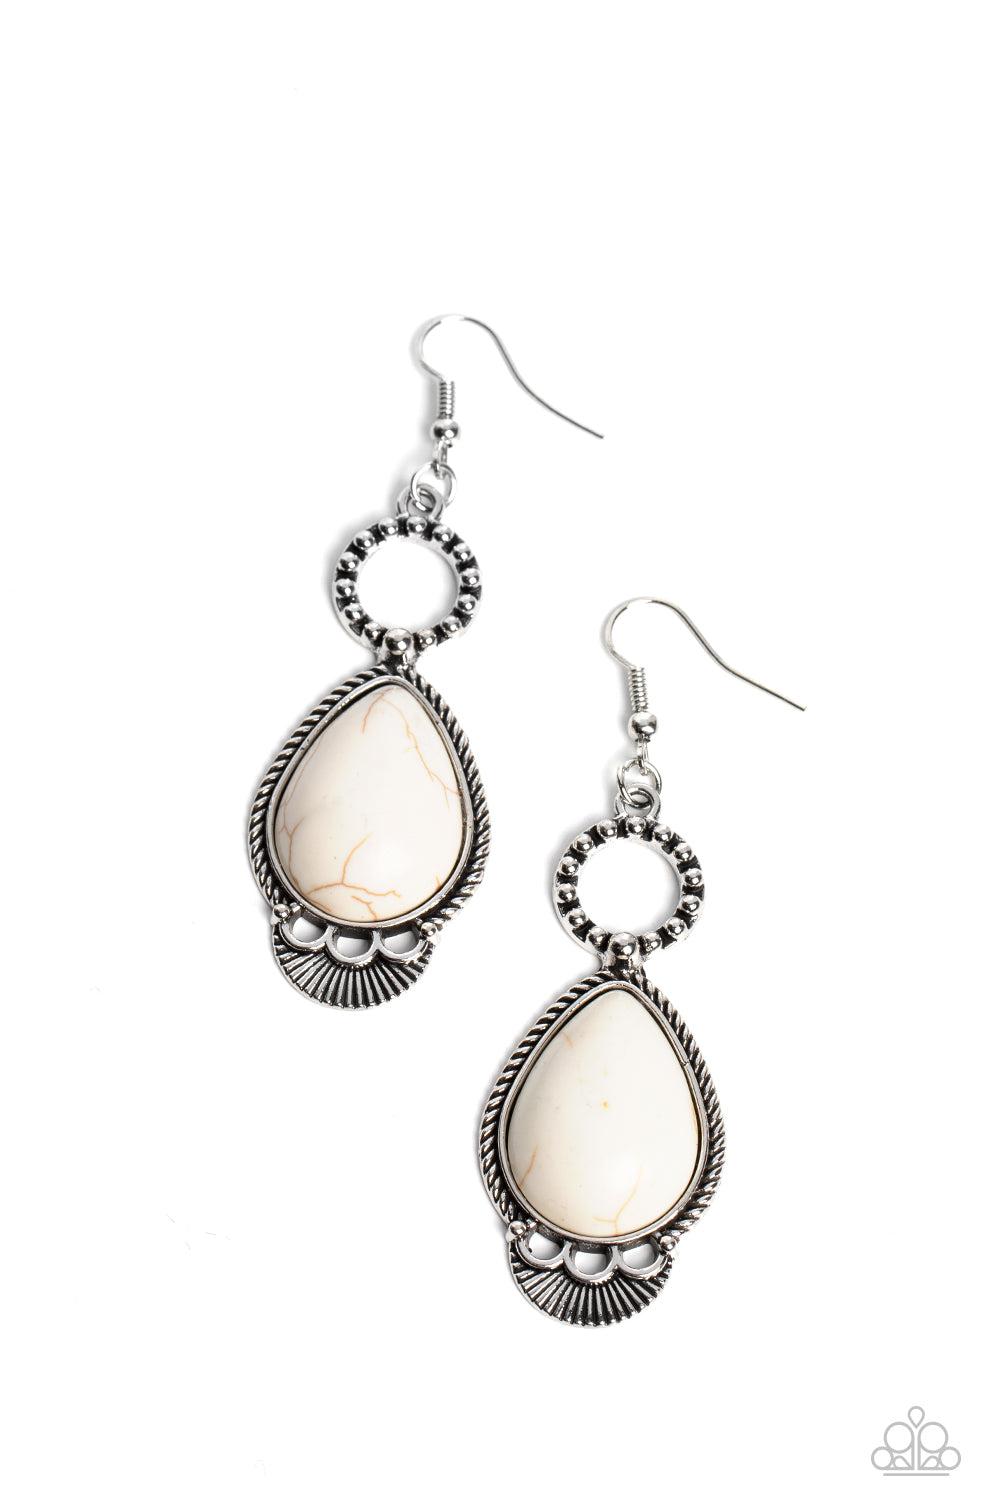 River Cruzin' White Stone Earrings - Paparazzi Accessories- lightbox - CarasShop.com - $5 Jewelry by Cara Jewels